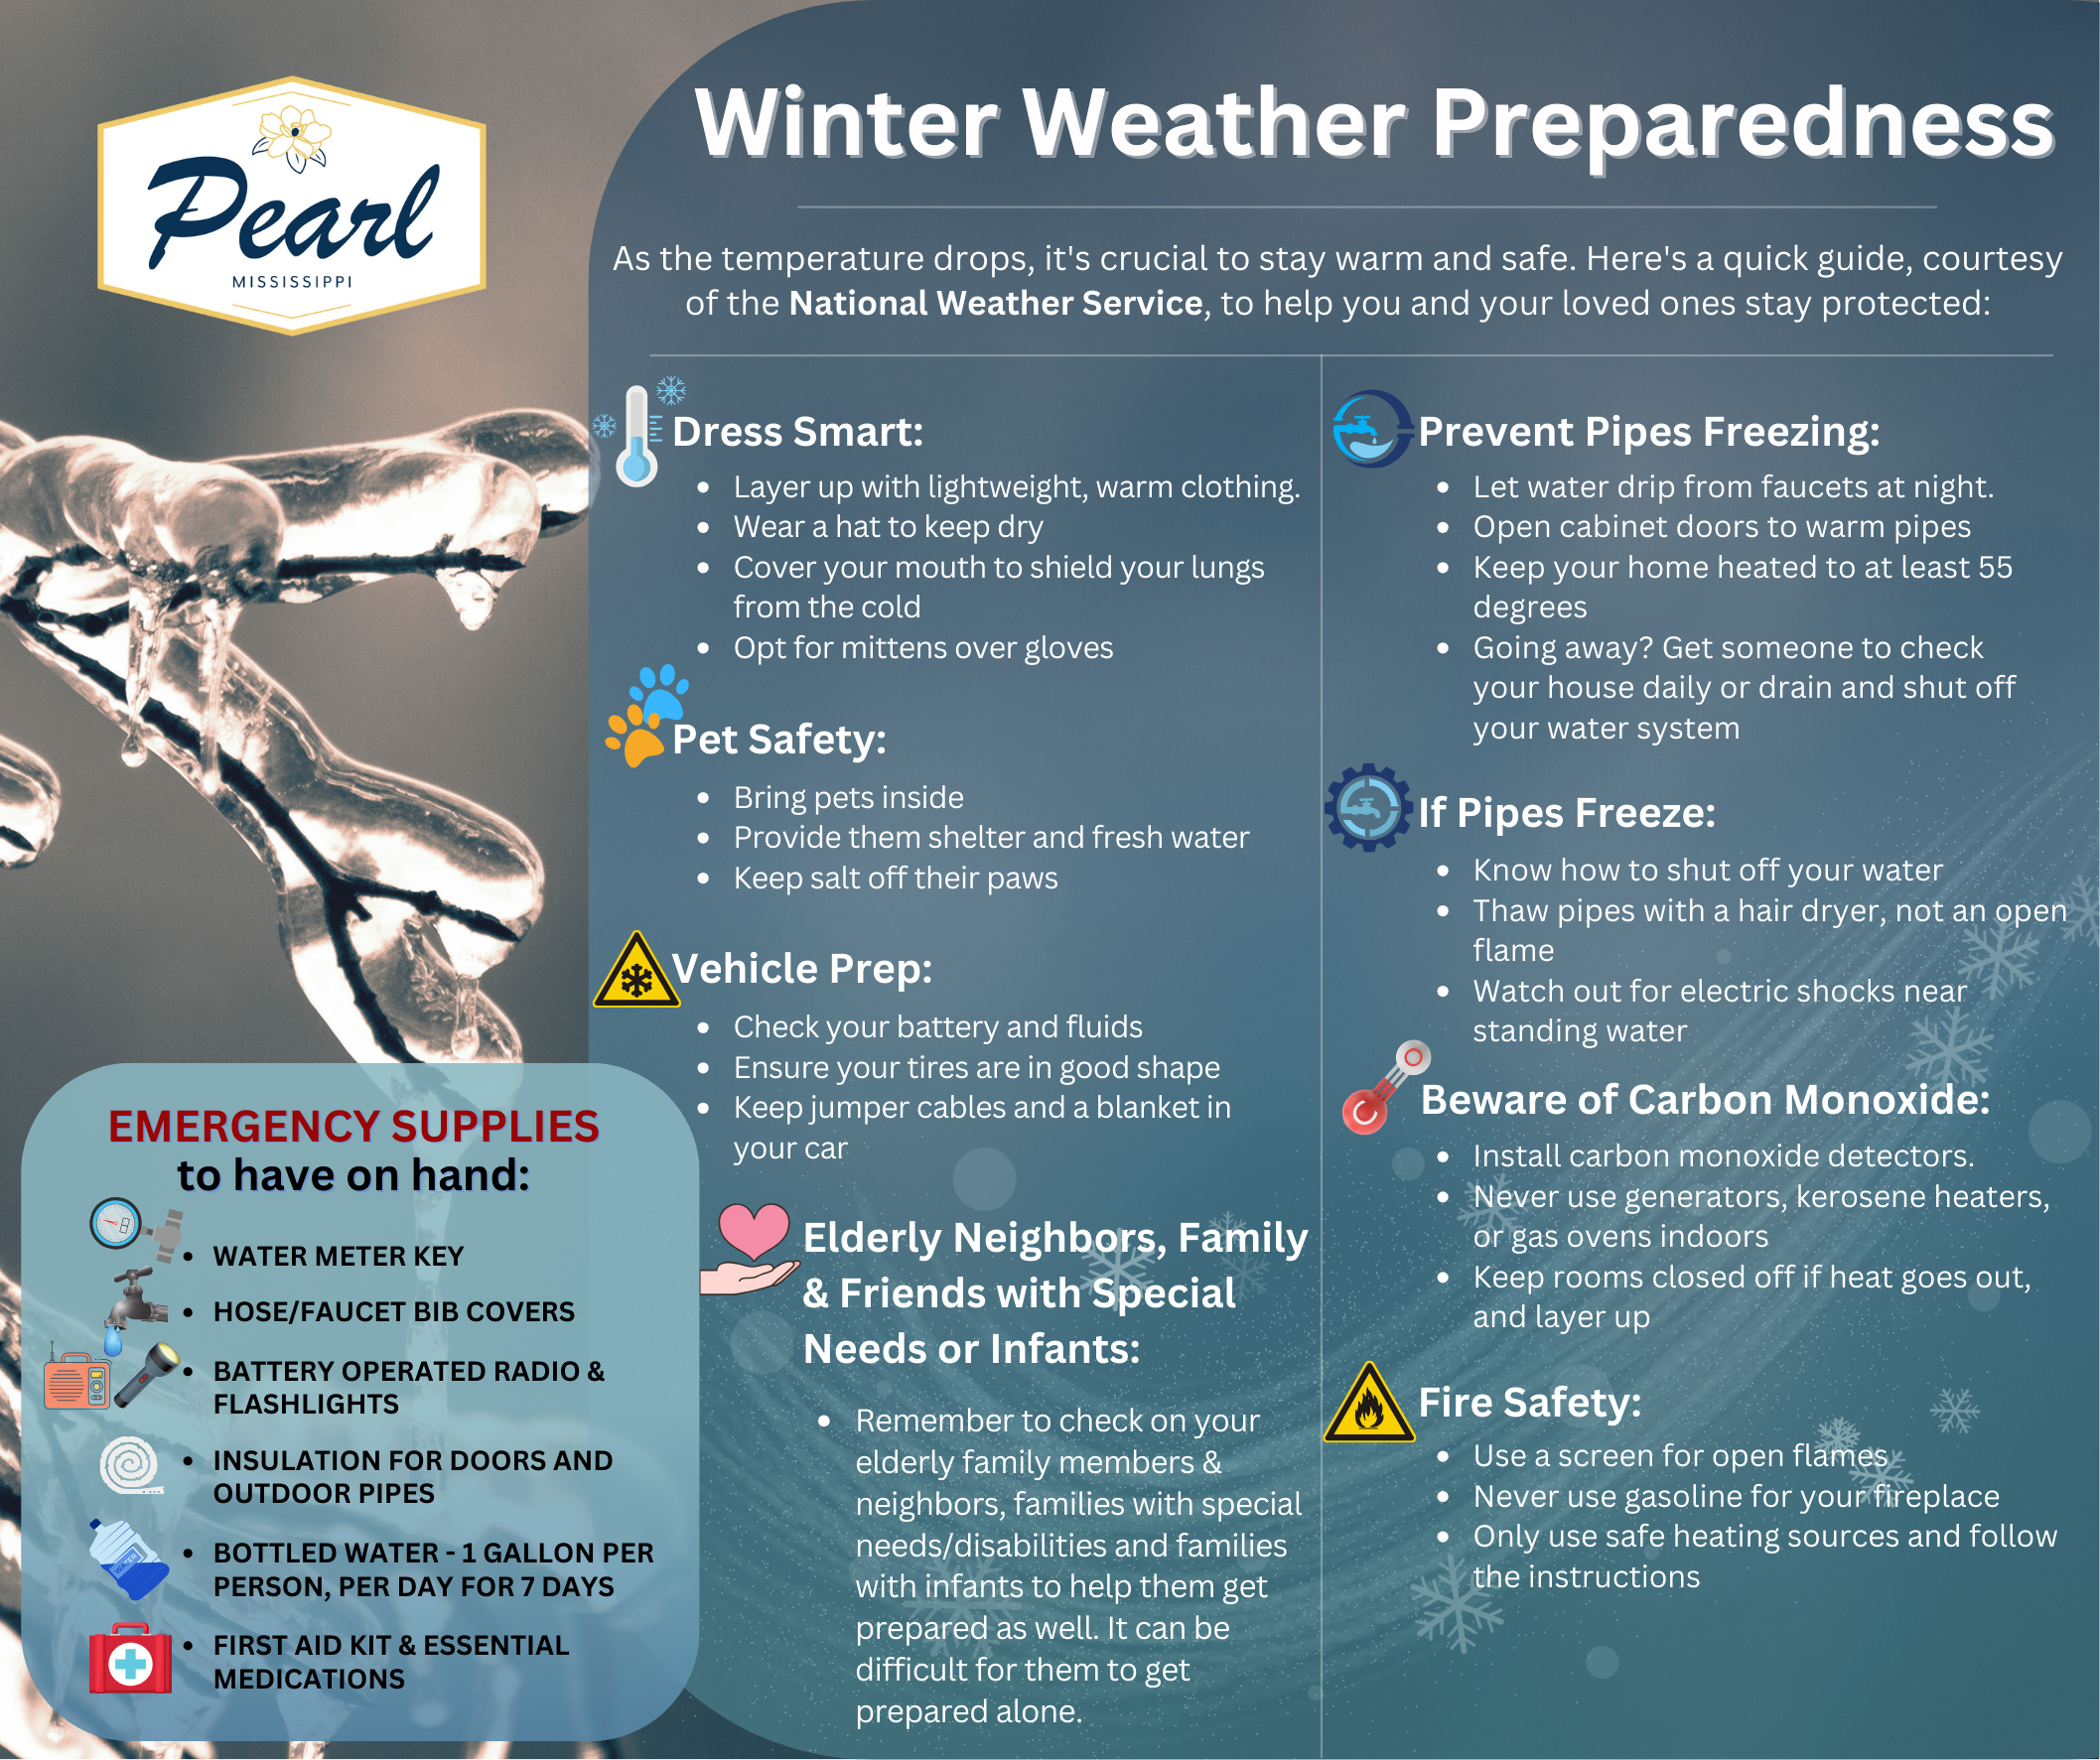 Winter Weather Preparedness Tips